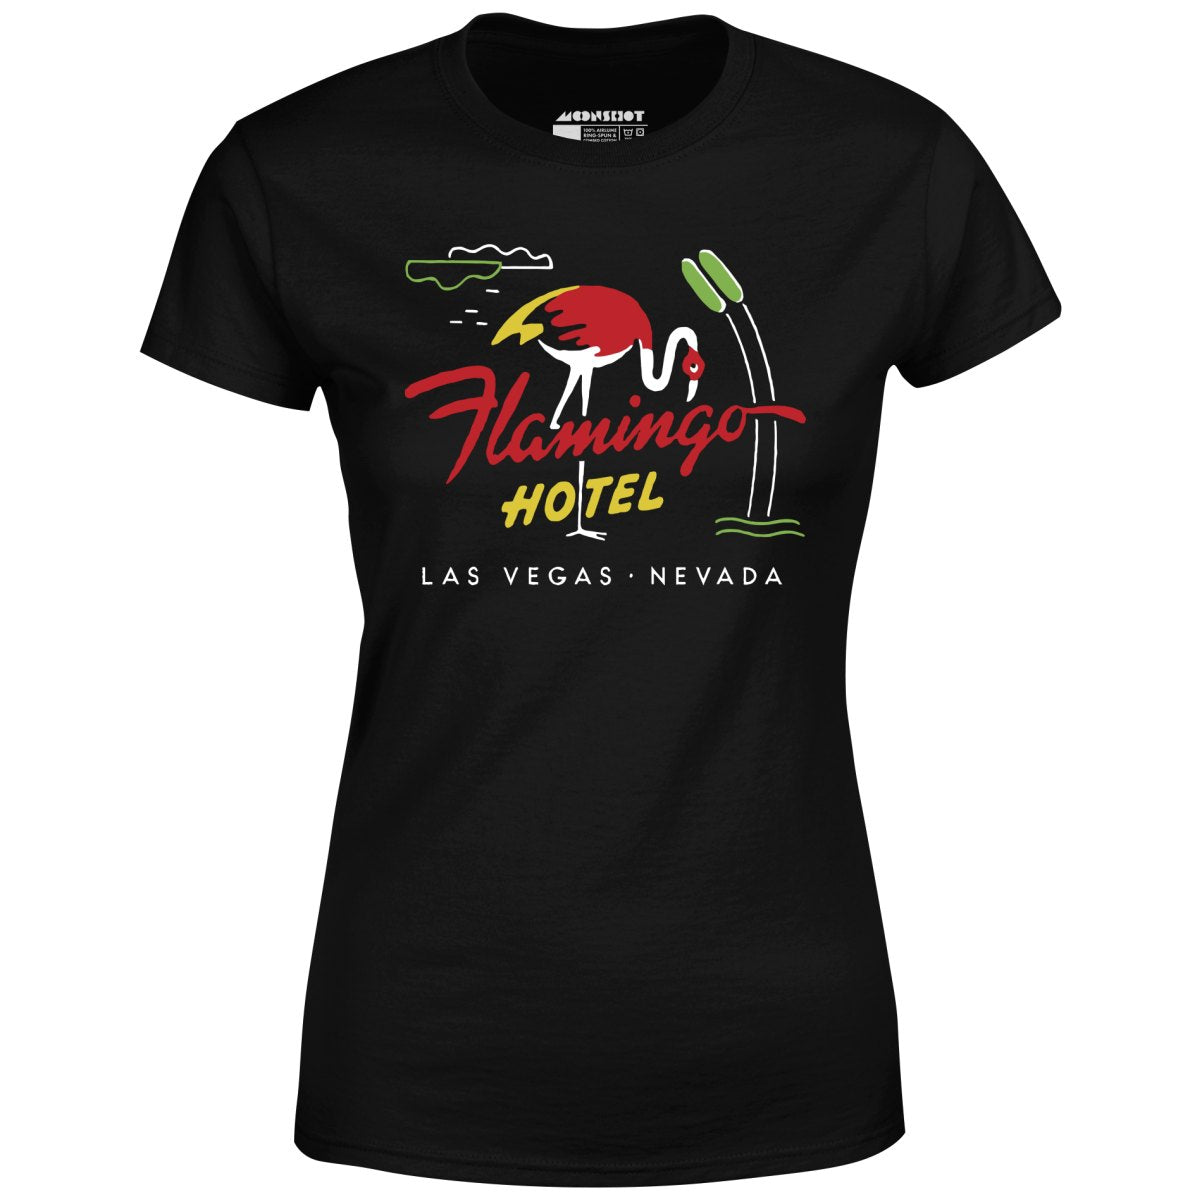 Flamingo Hotel v3 - Vintage Las Vegas - Women's T-Shirt